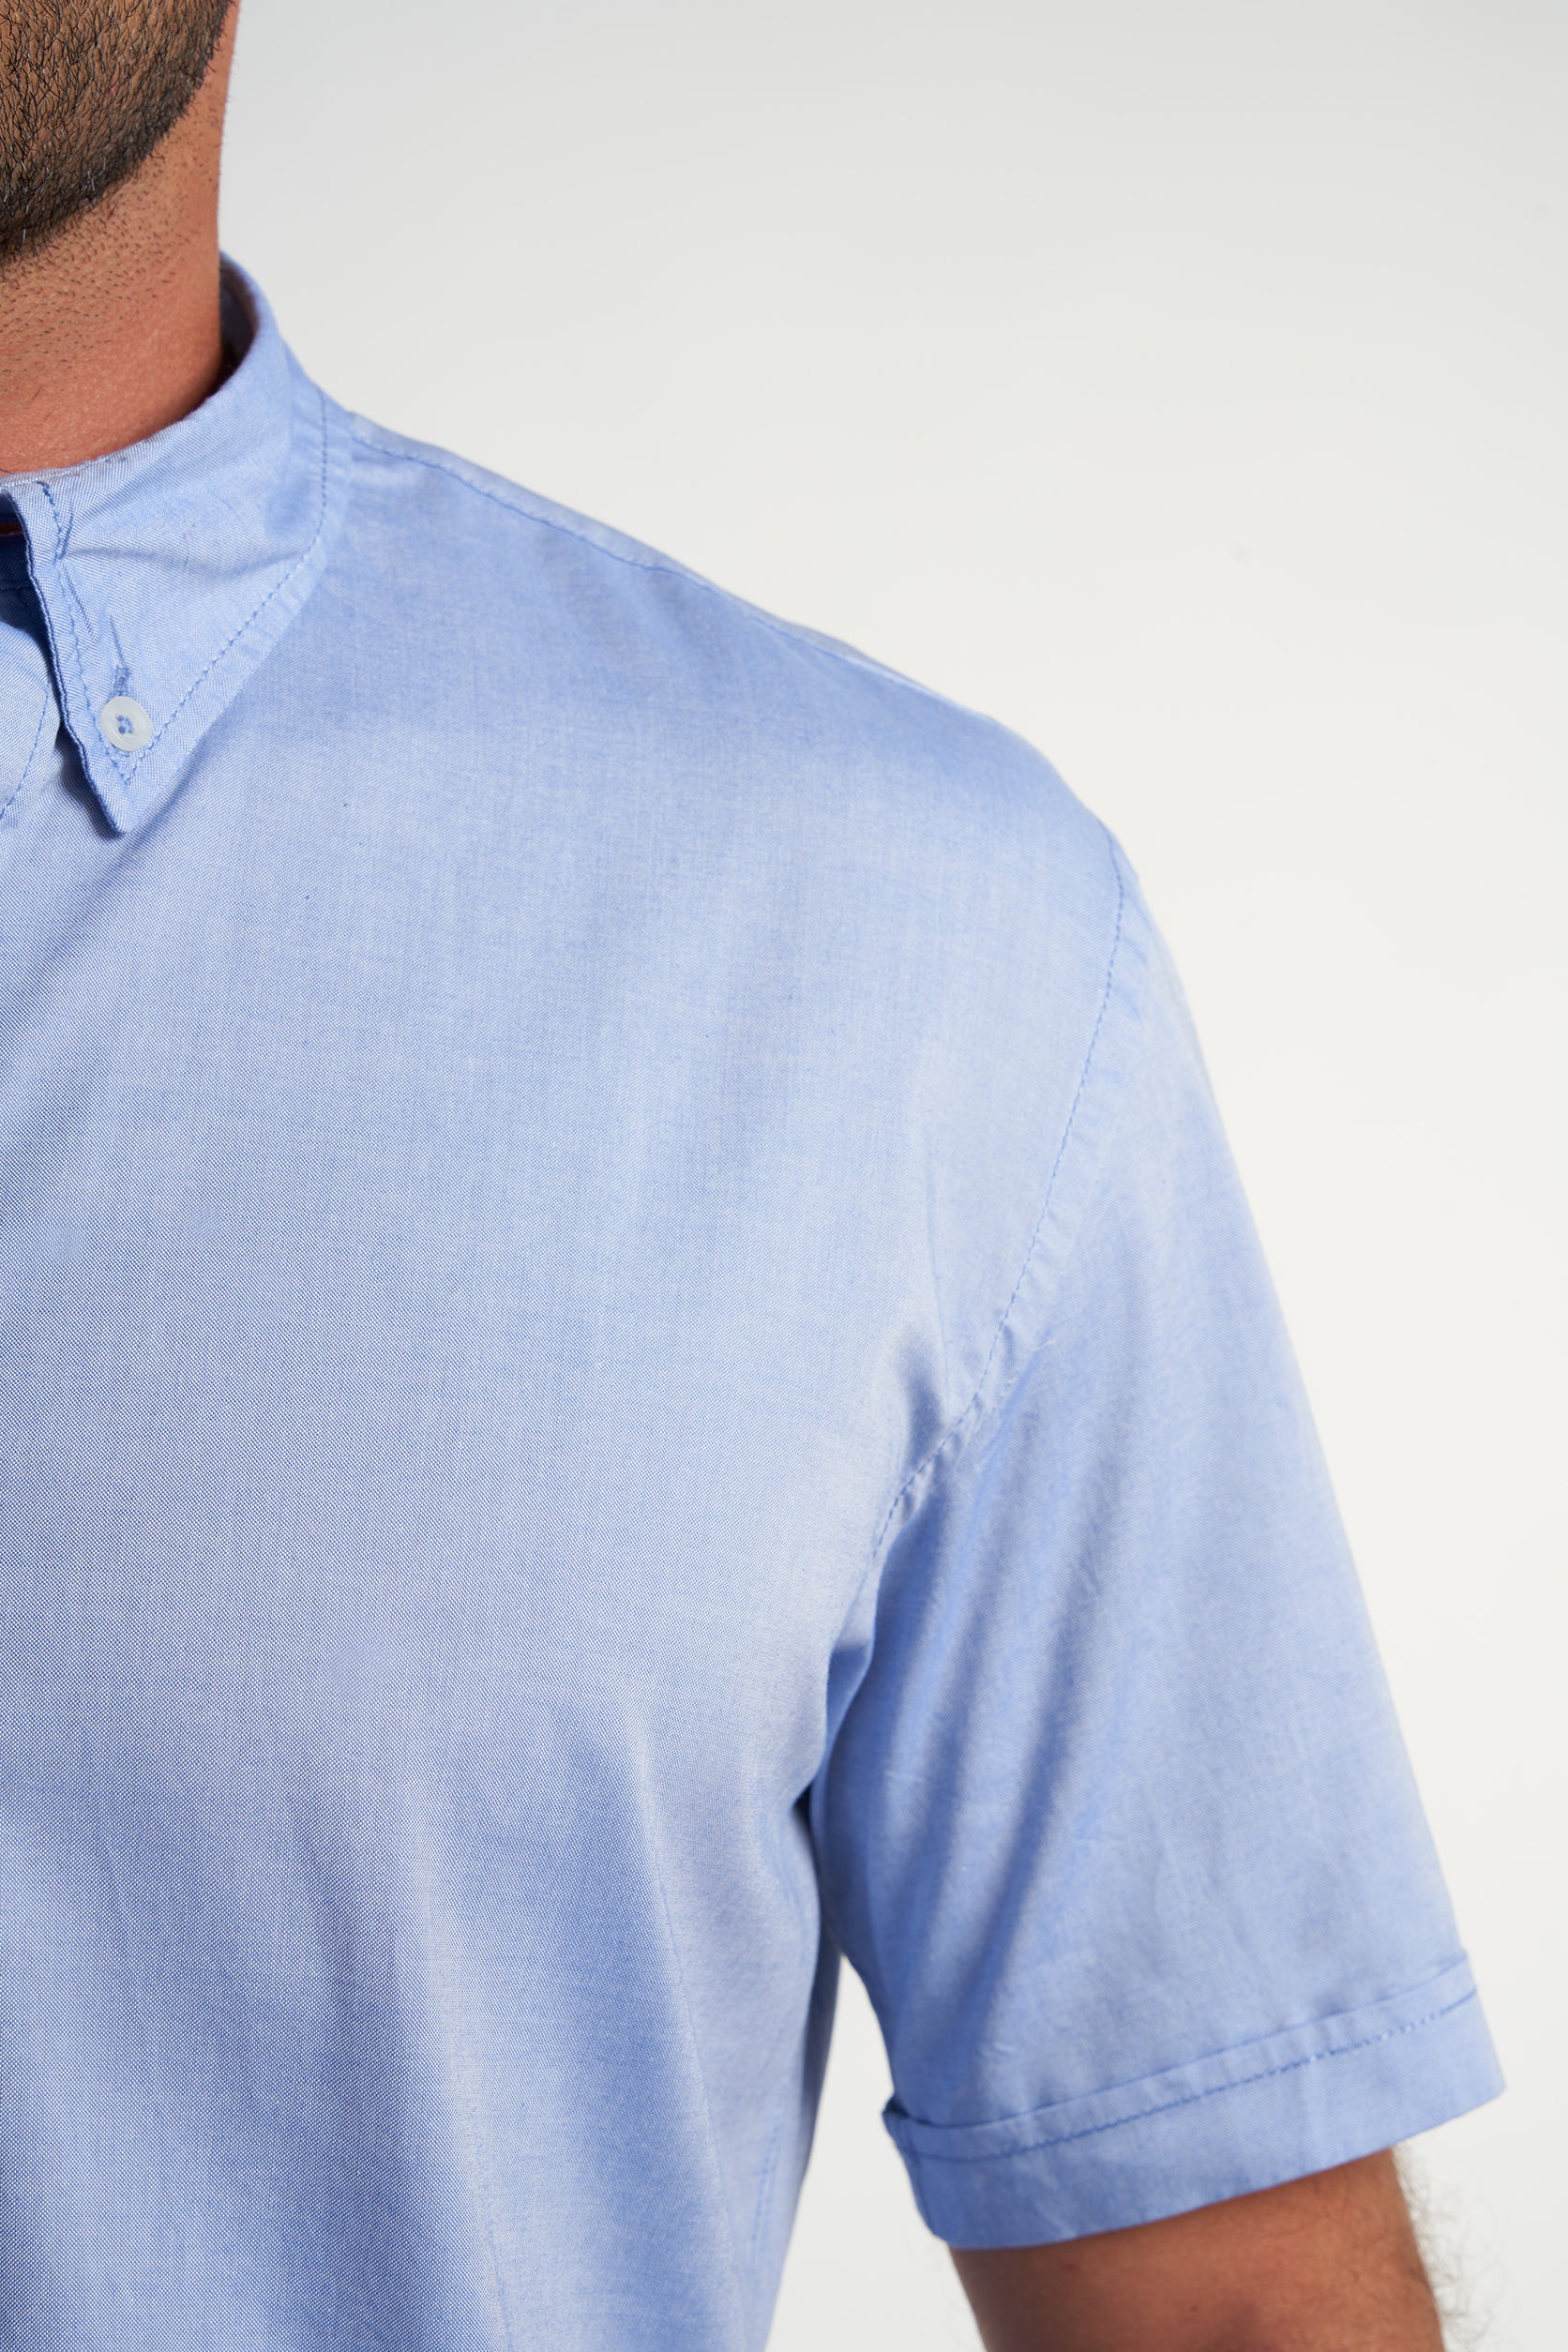 Plain Light Blue Cotton shirt(619-620)